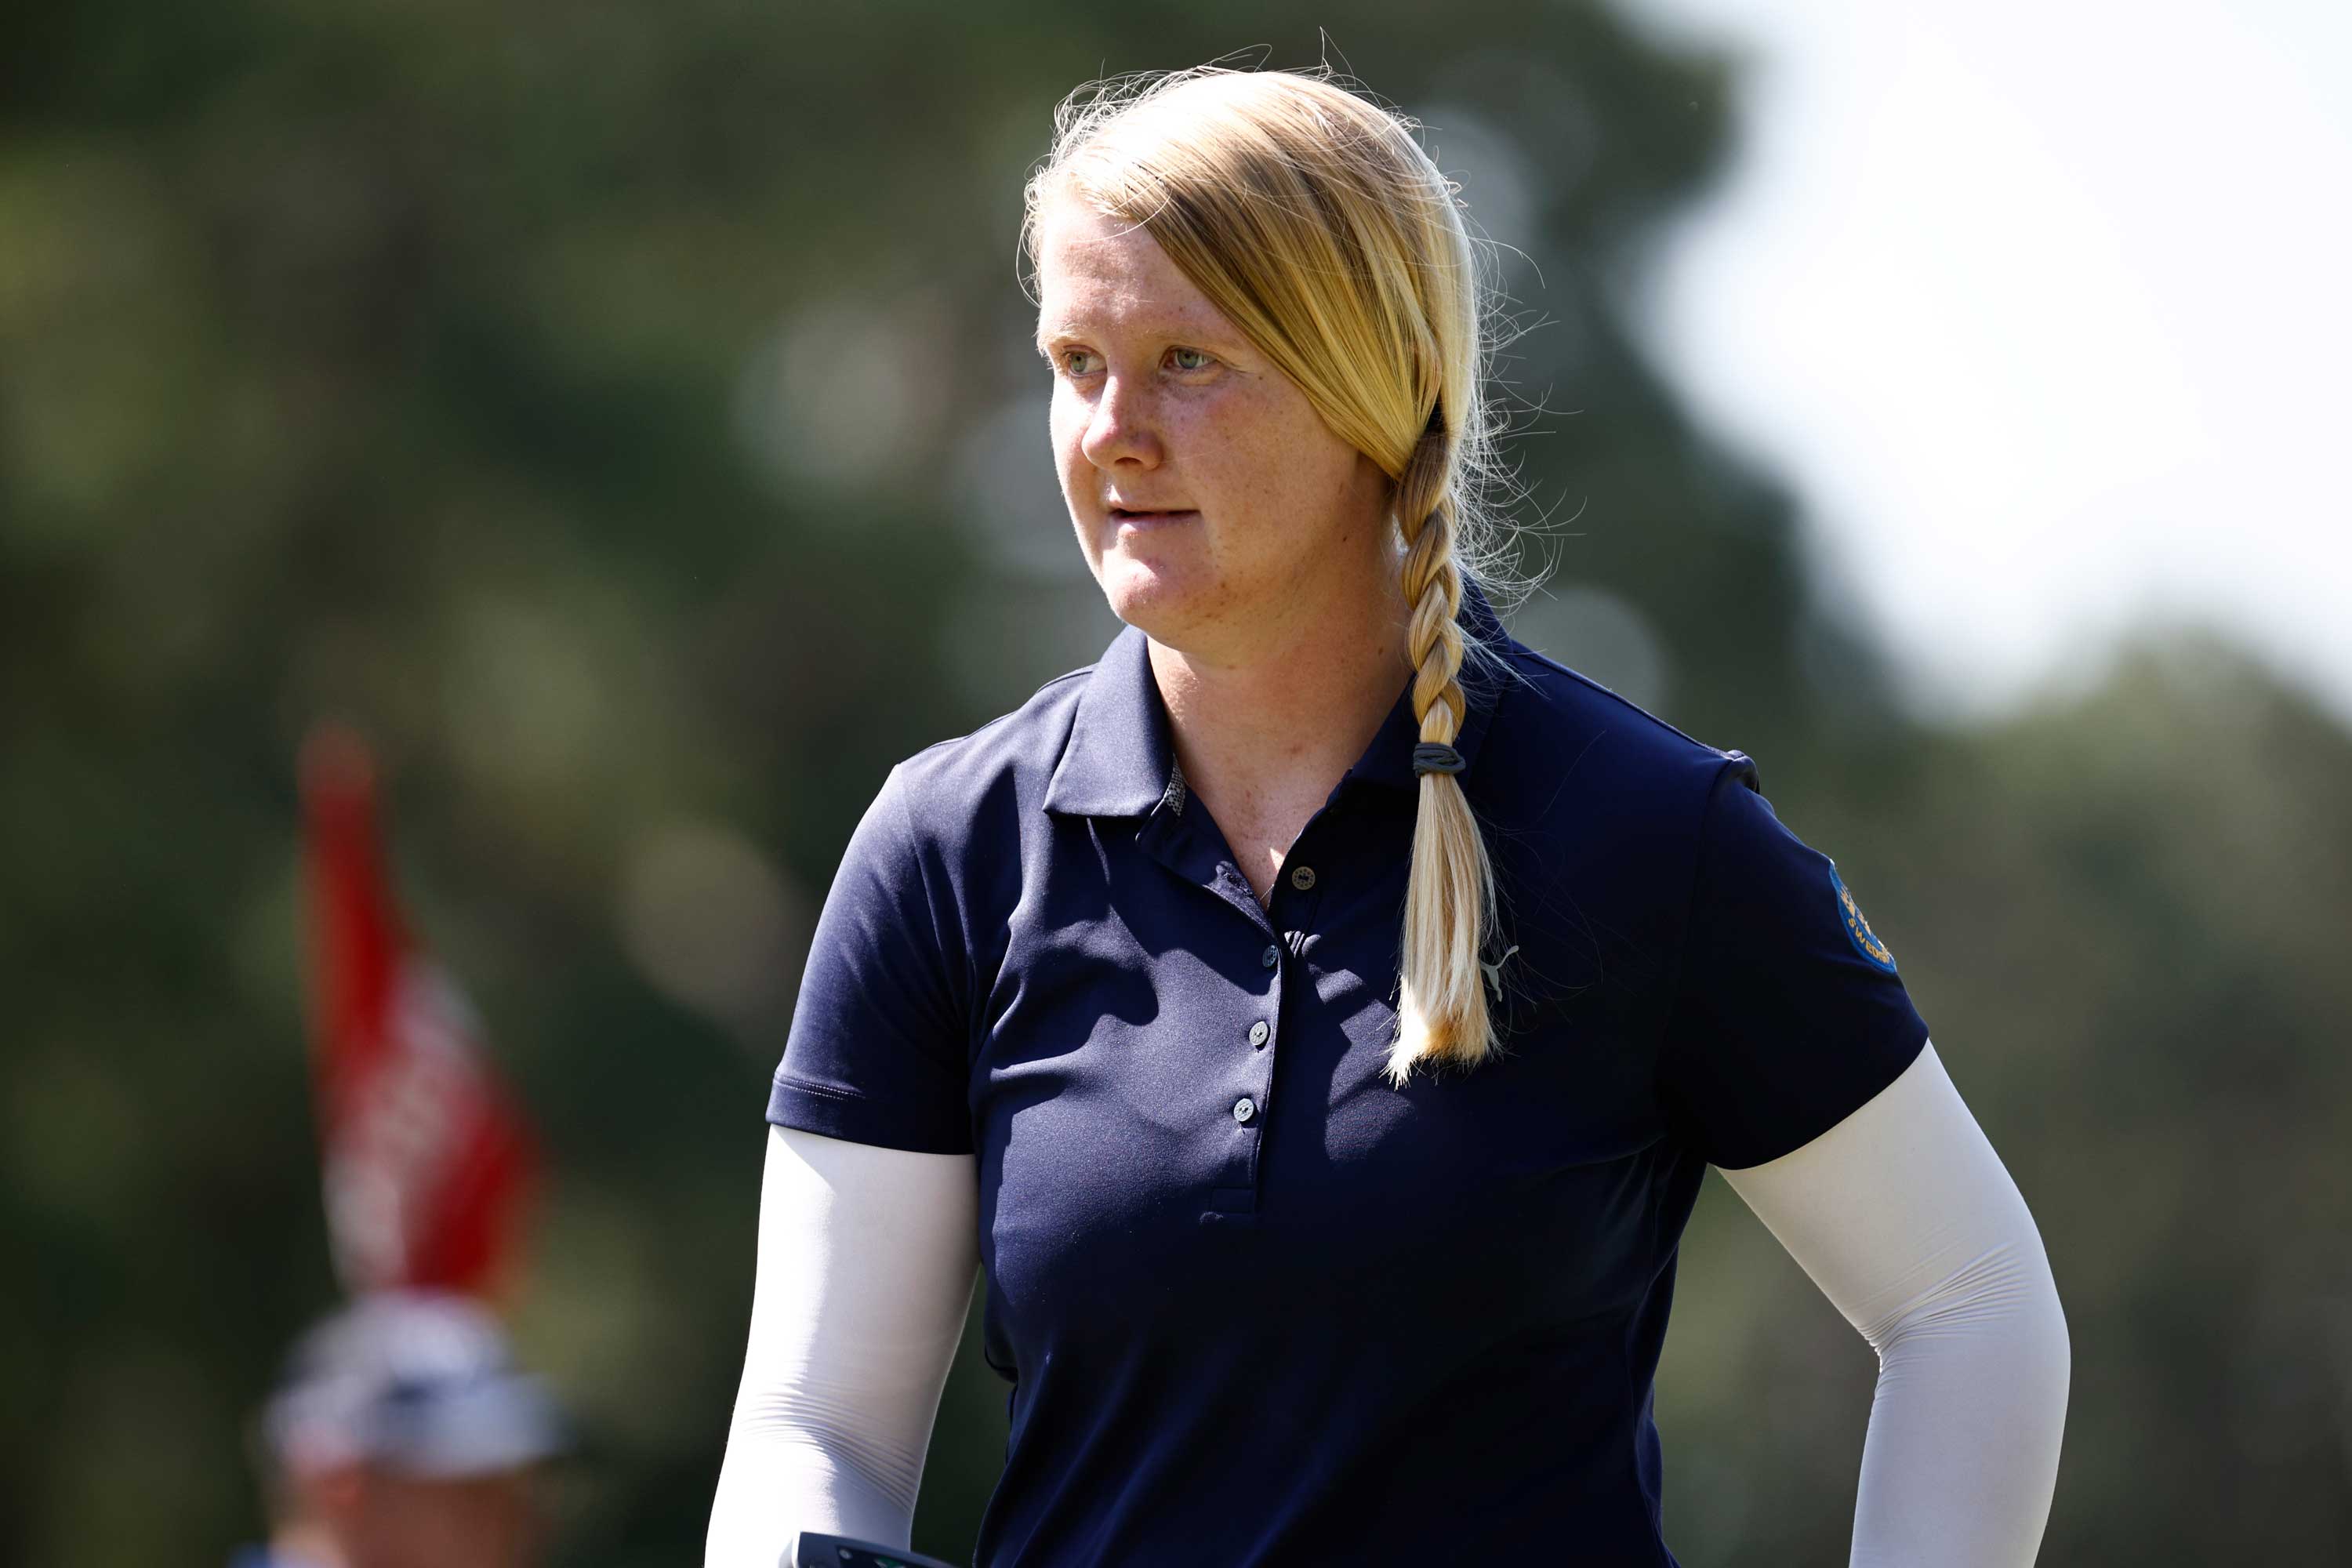 LSU Women's Golf: Ingrid Lindblad now ranked as No. 1 world amateur